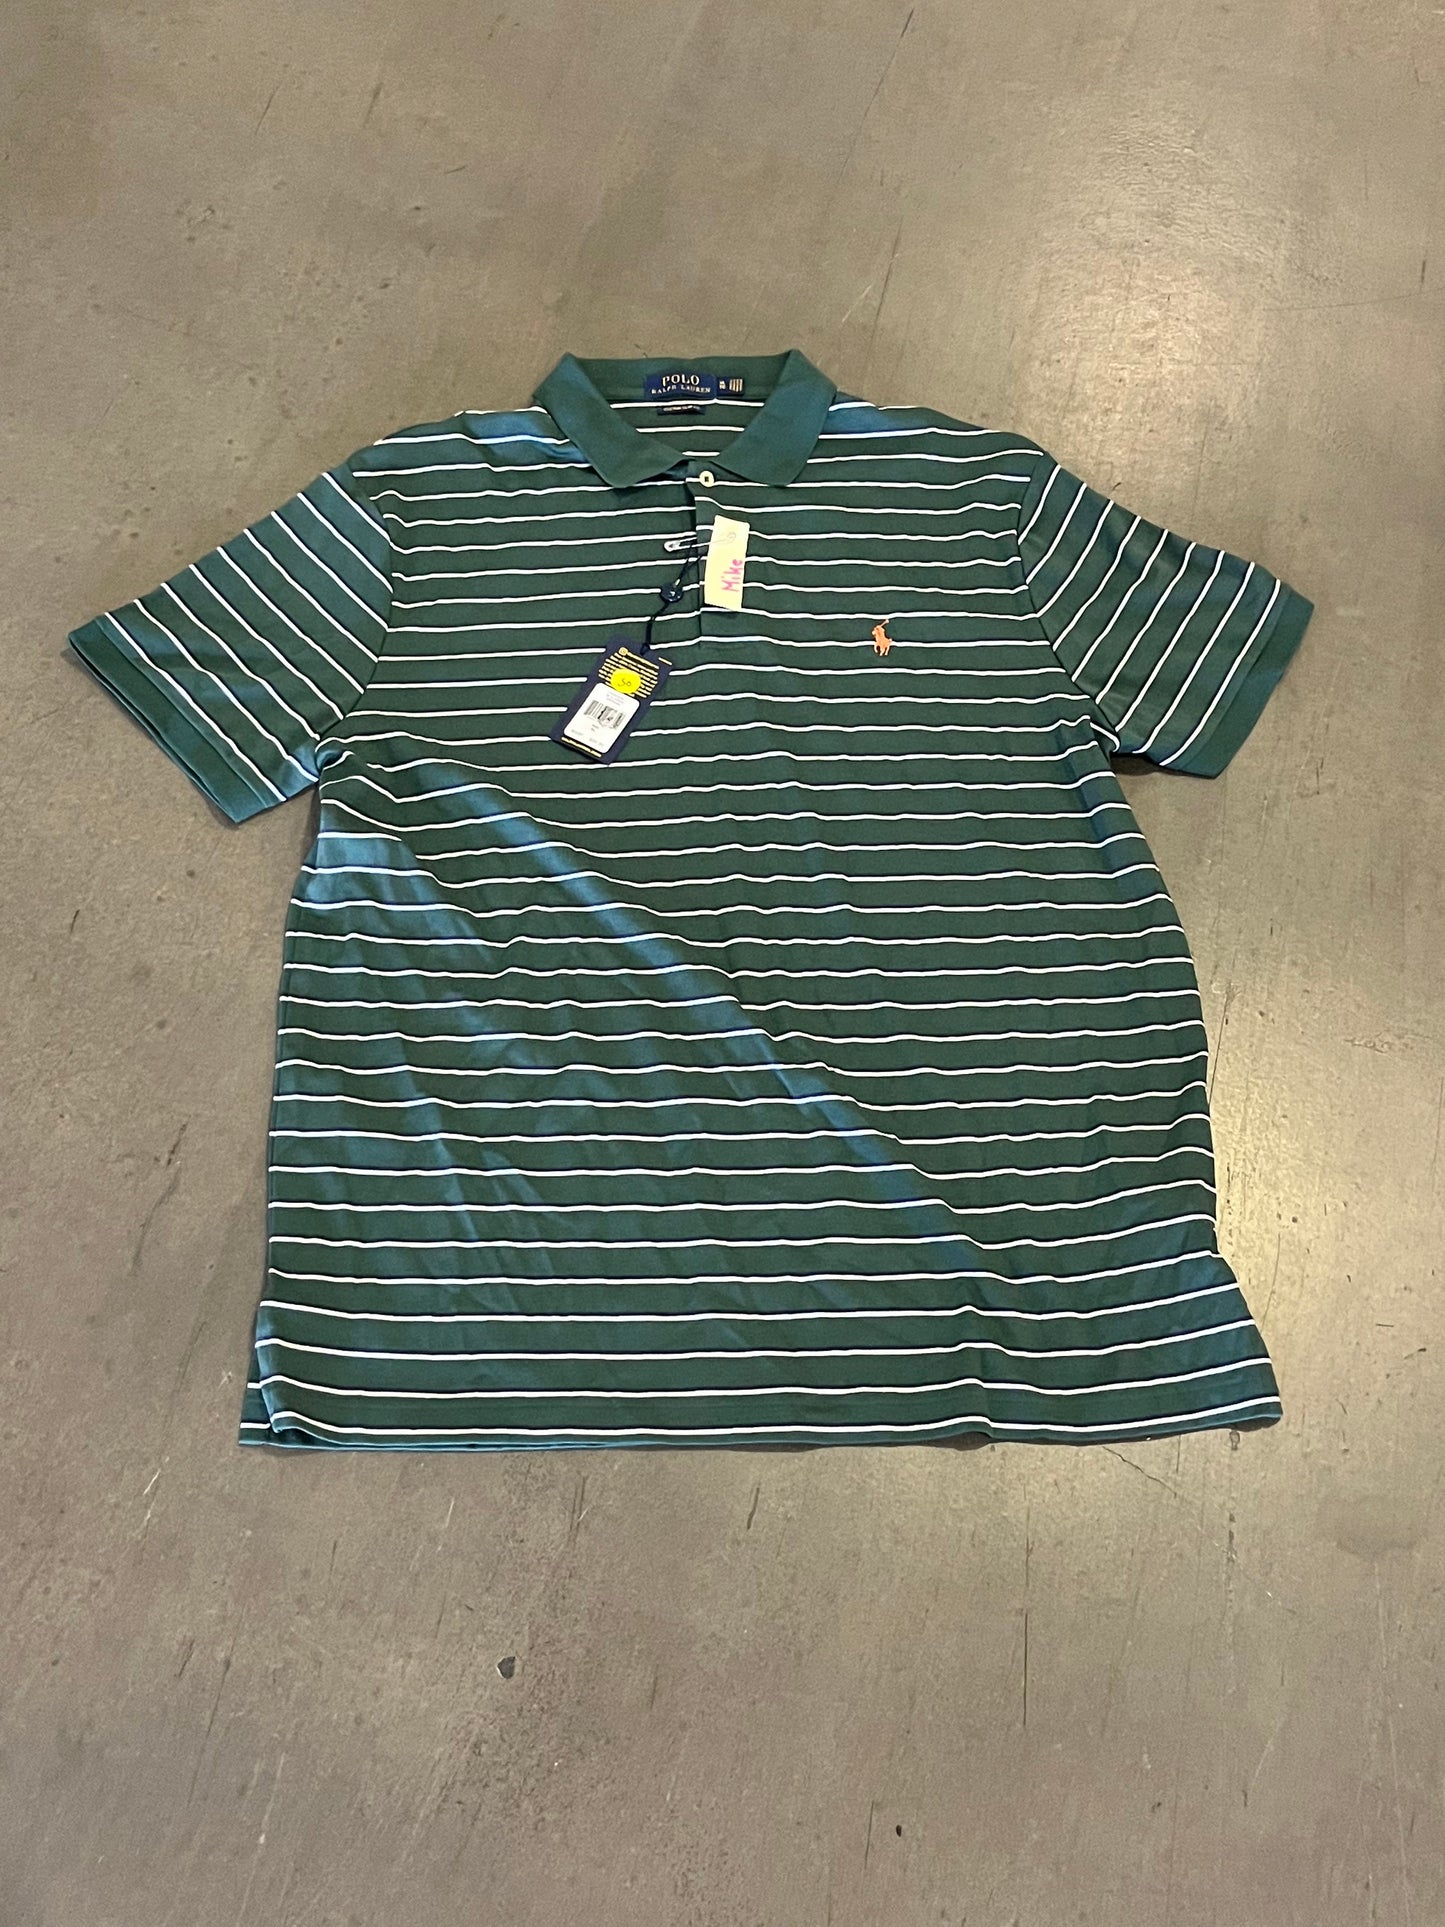 VEEP: Mike's Polo Brand Shirt (XL)